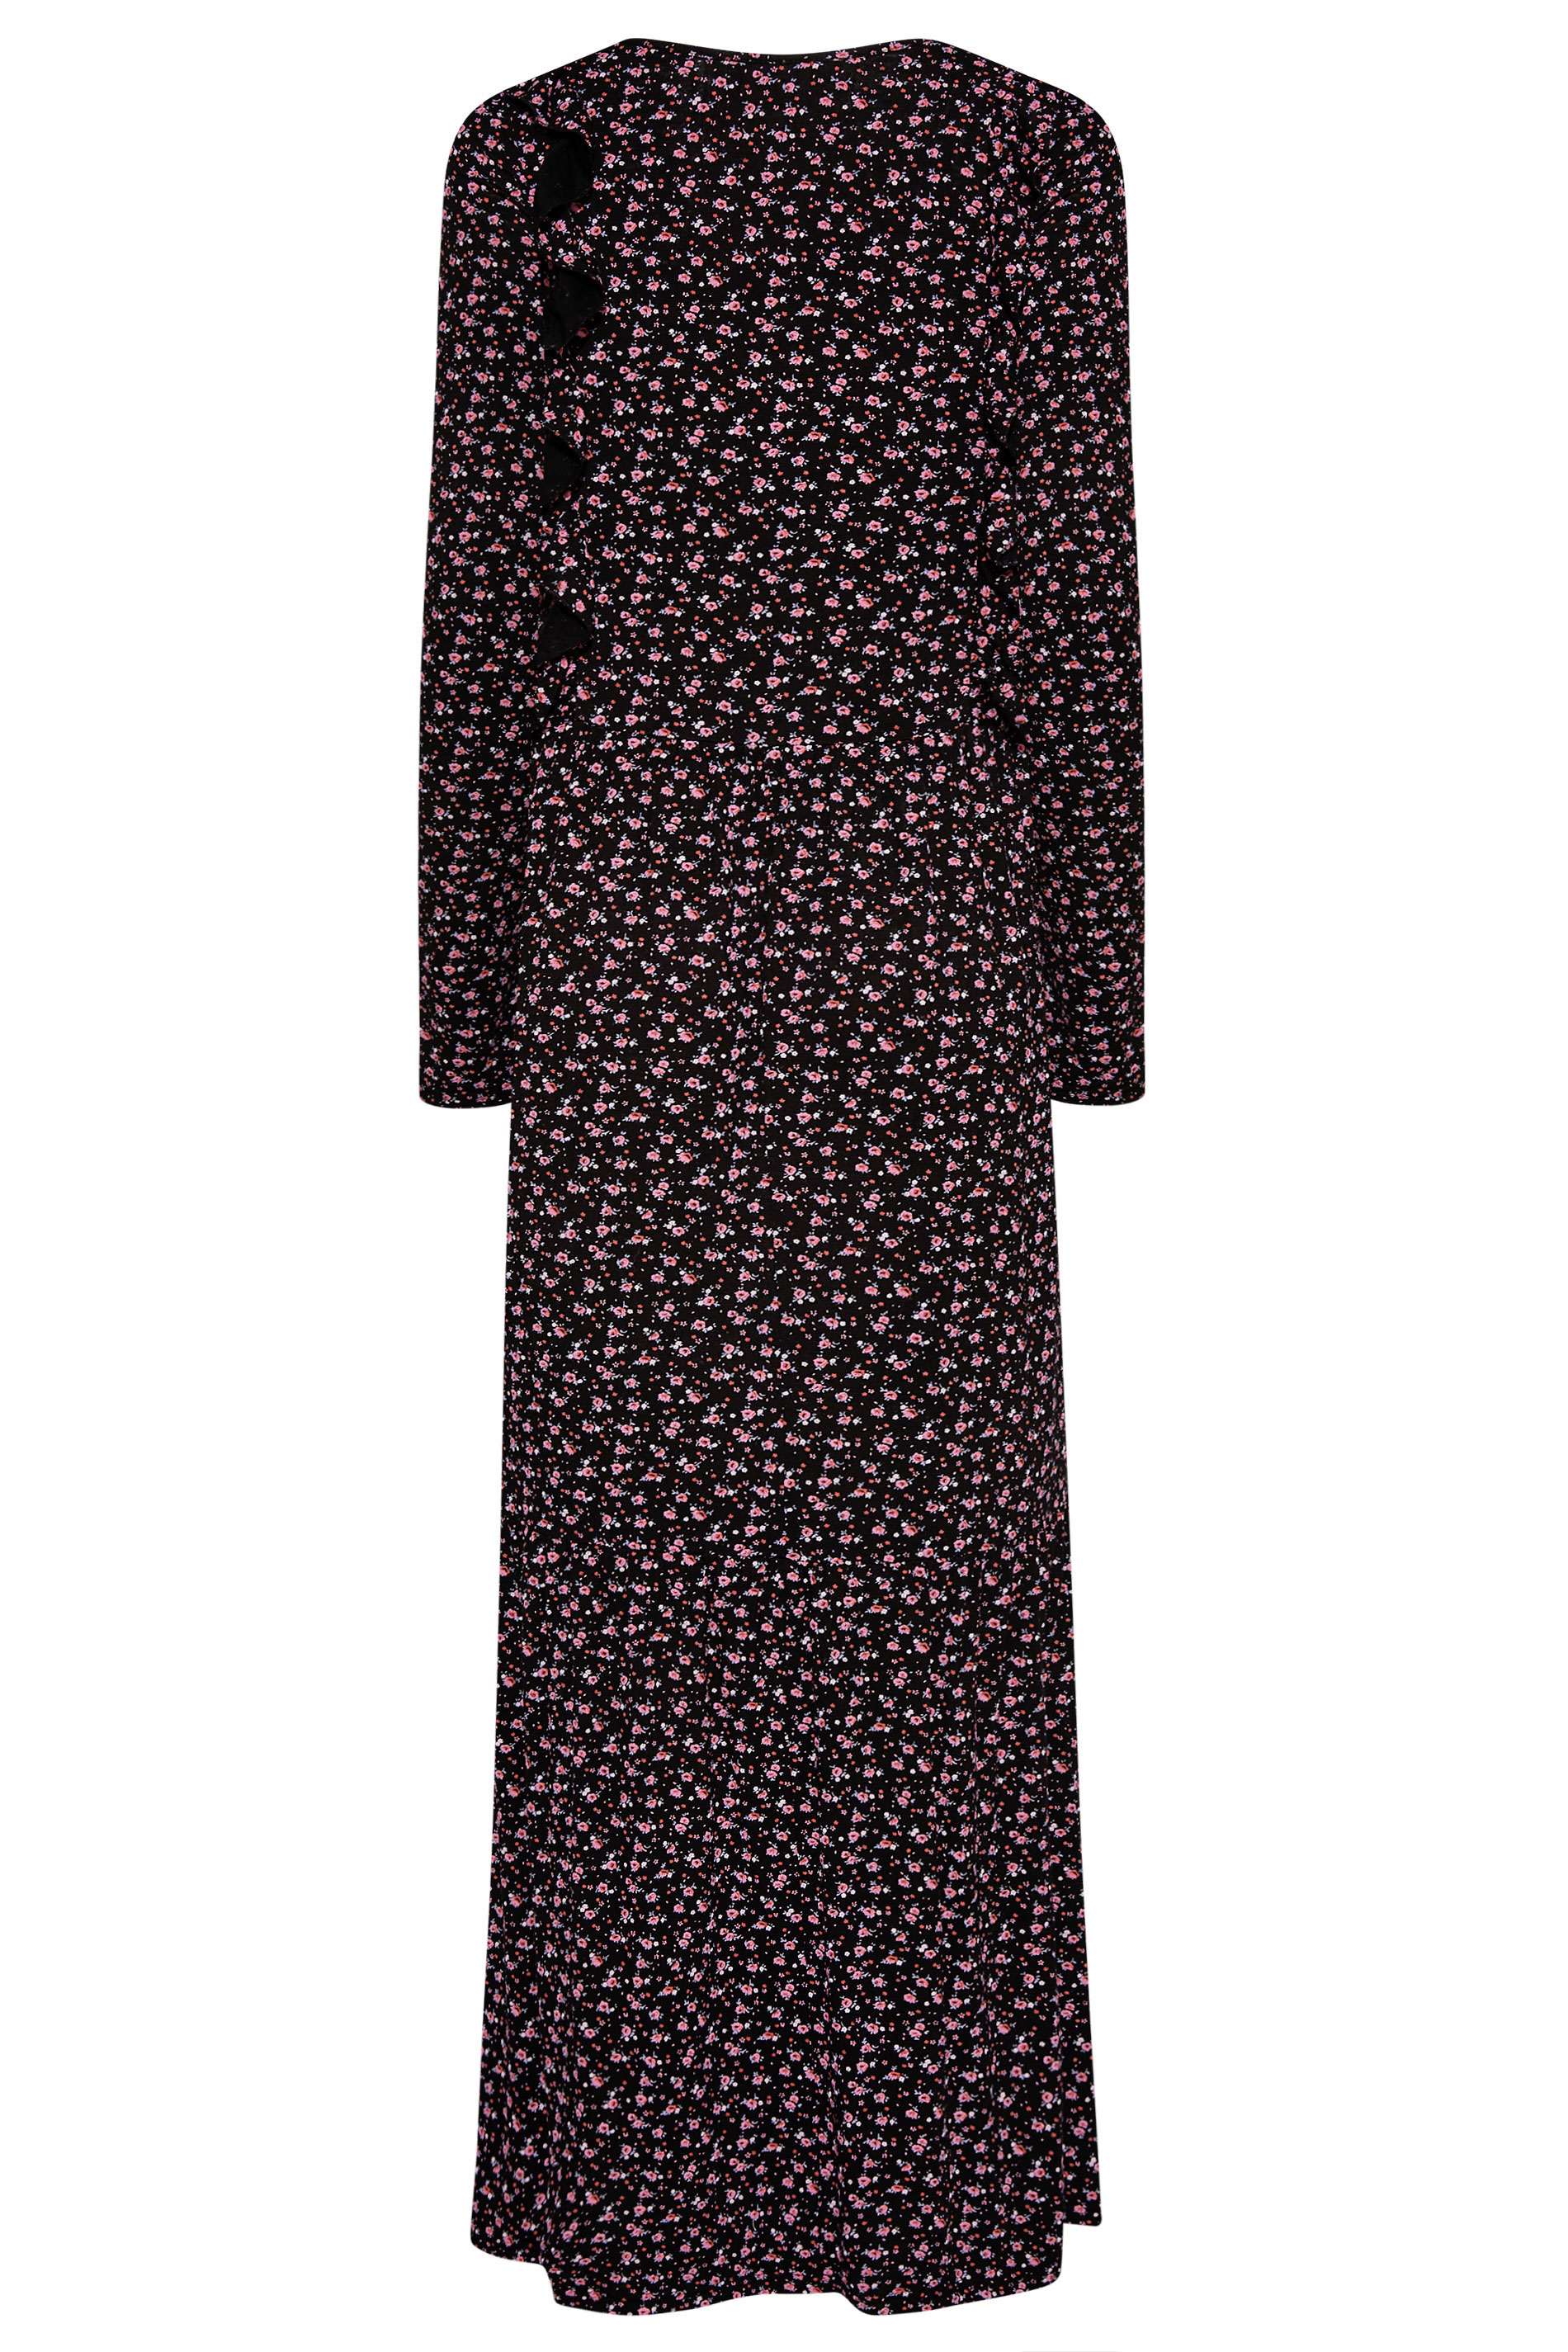 Tall Women's LTS Black Ditsy Floral Ruffle Midi Dress | Long Tall Sally 3